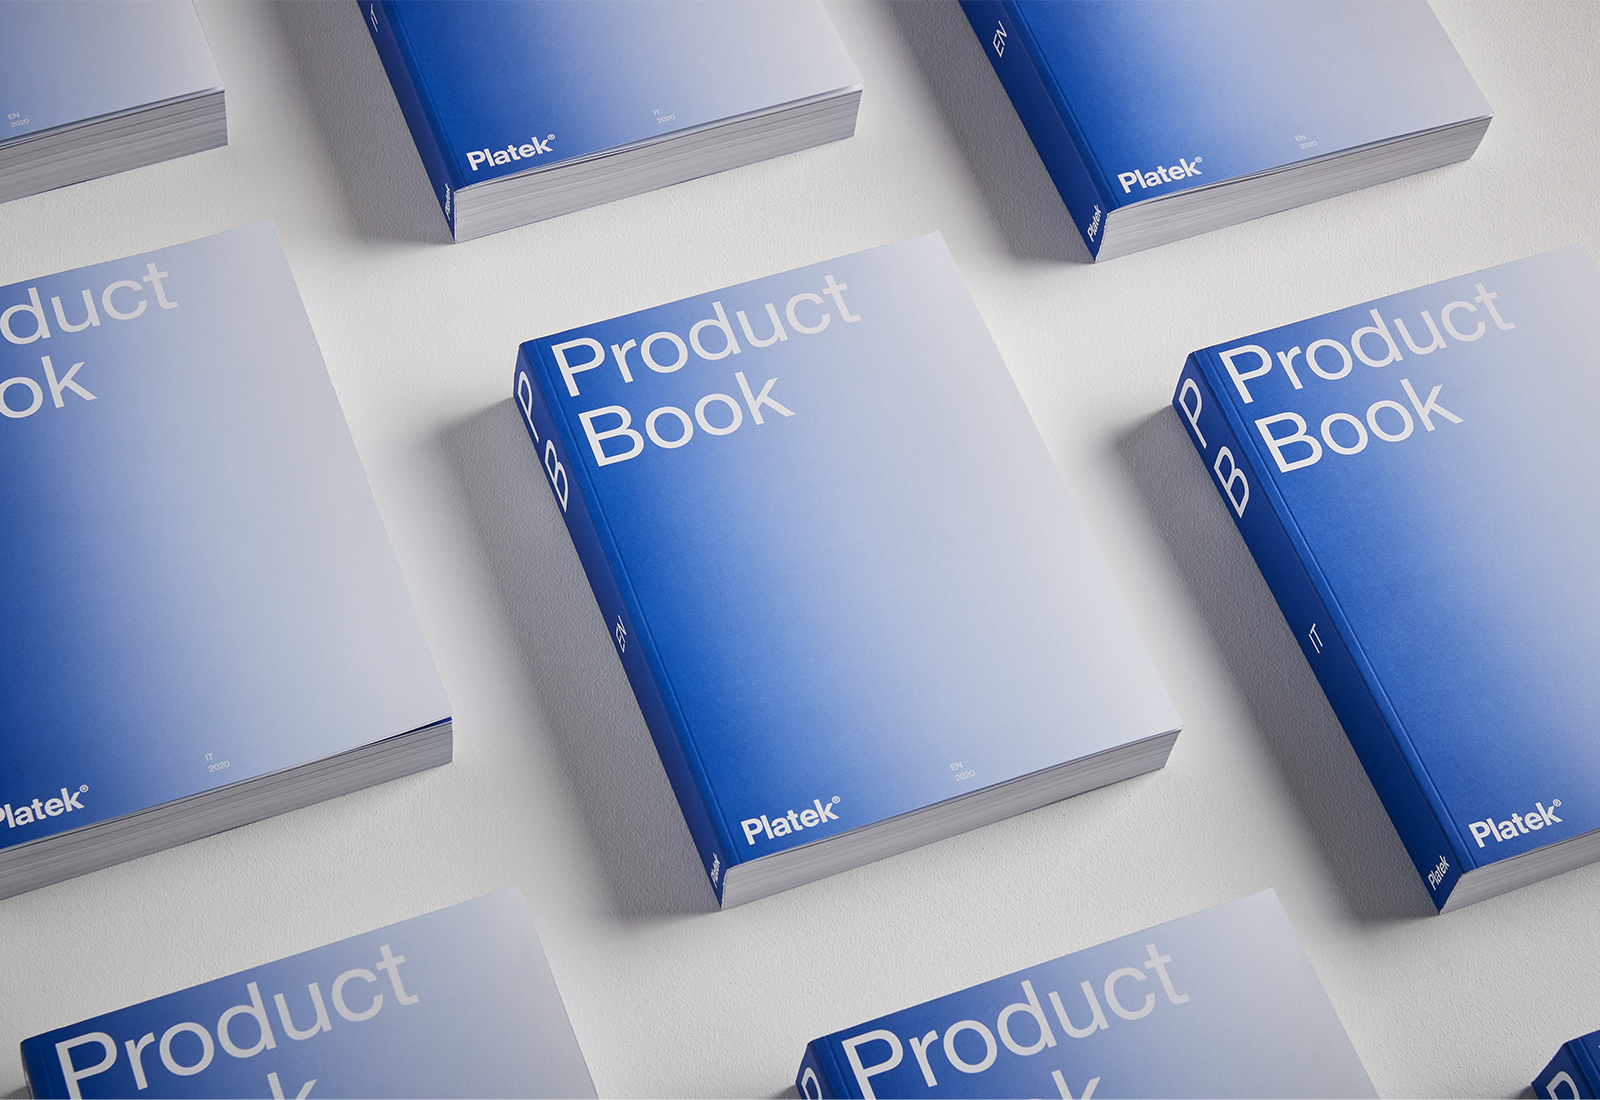 Product 2020. Платек. Платек книги. Product book.